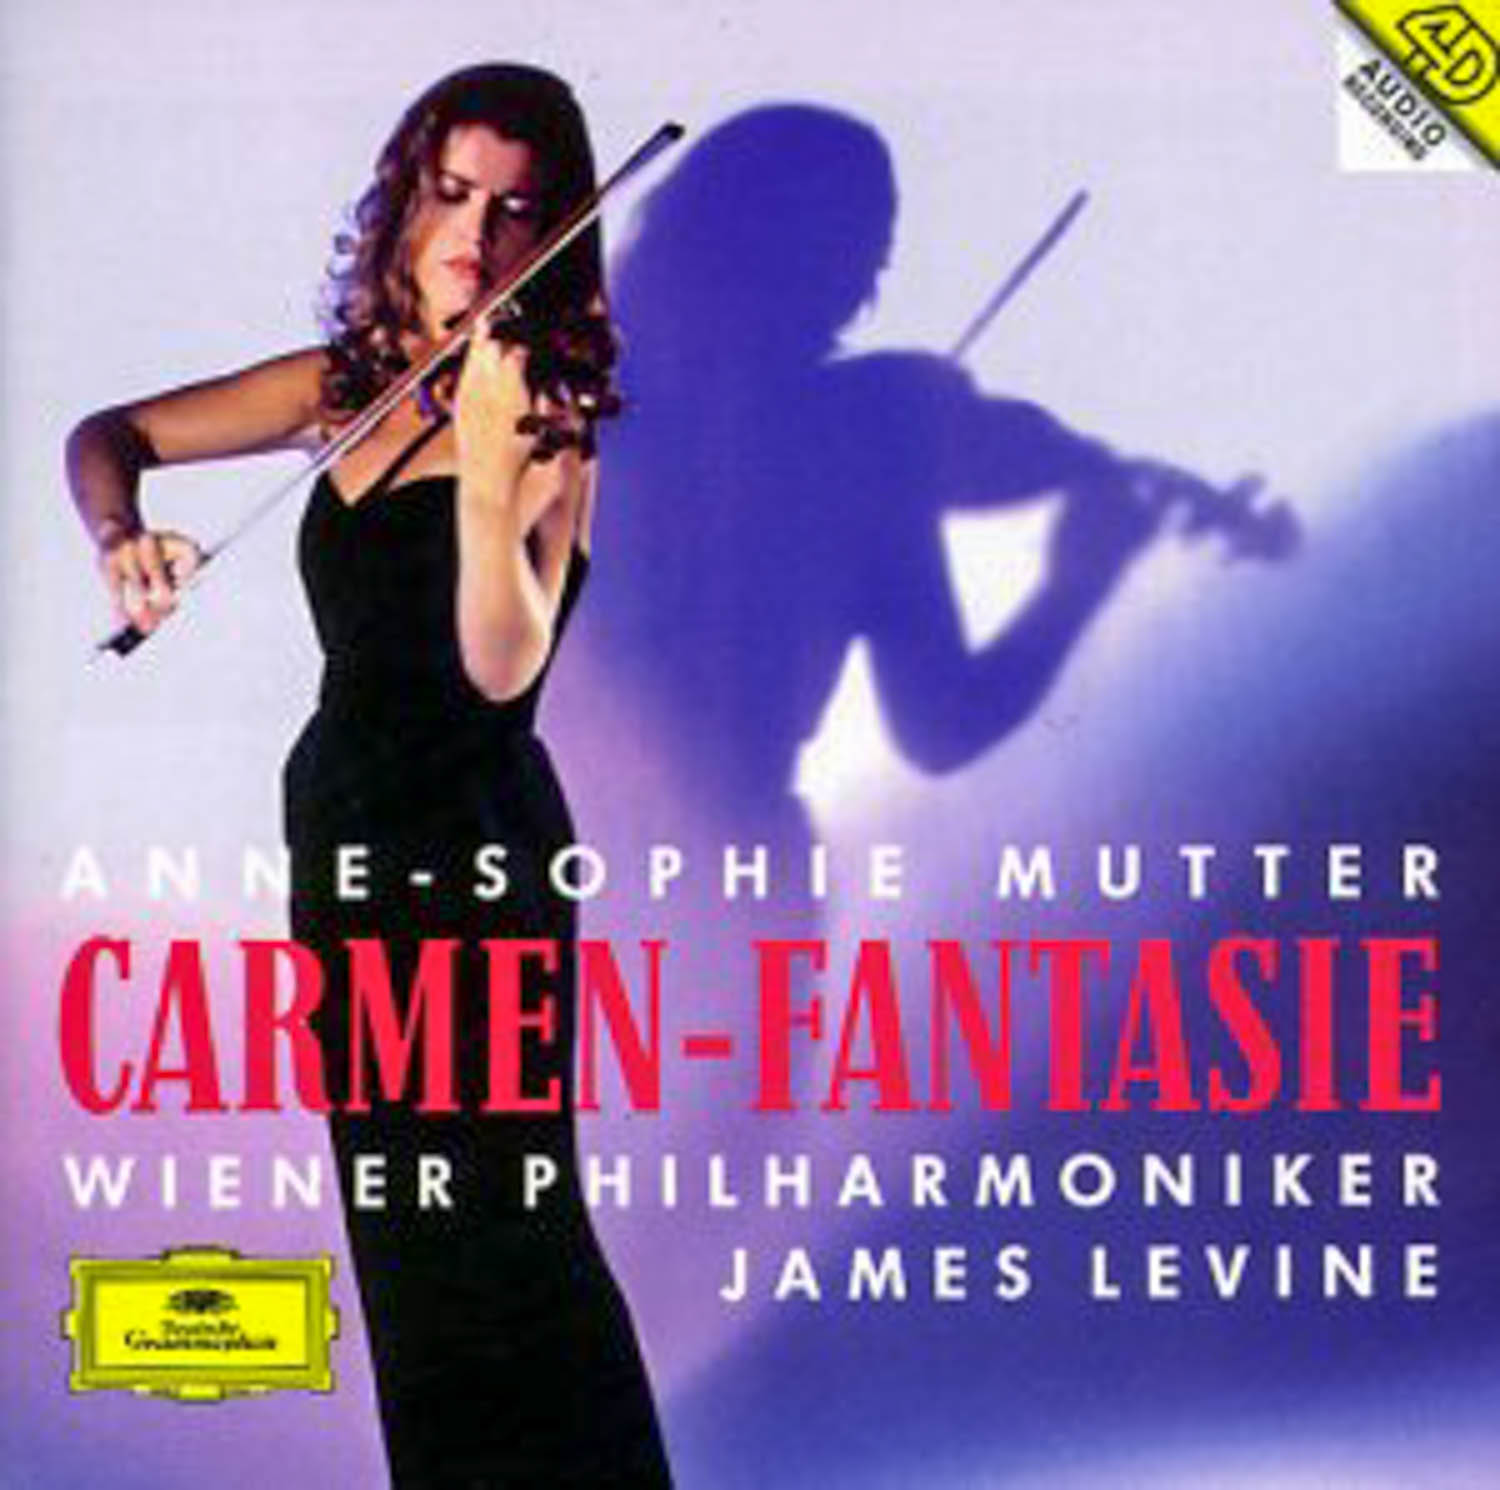 Anne-Sophie Mutter; James Levine, Wiener Philharmoniker  Carmen-Fantasie  *Audio-CD*. 